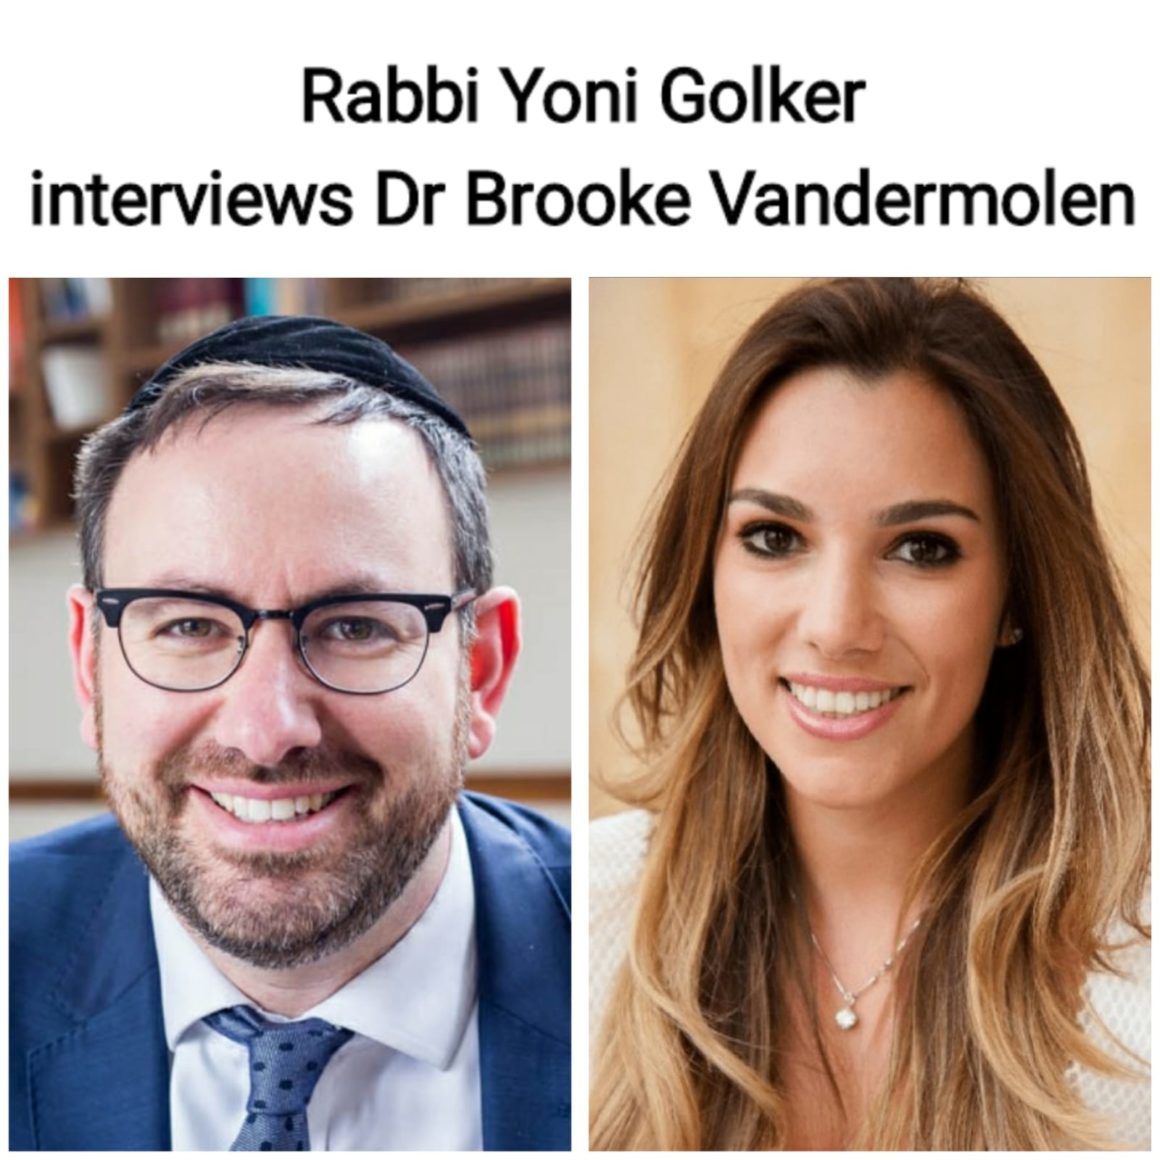 Rabbi Yoni Golker interviews Dr Brooke Vandermolen